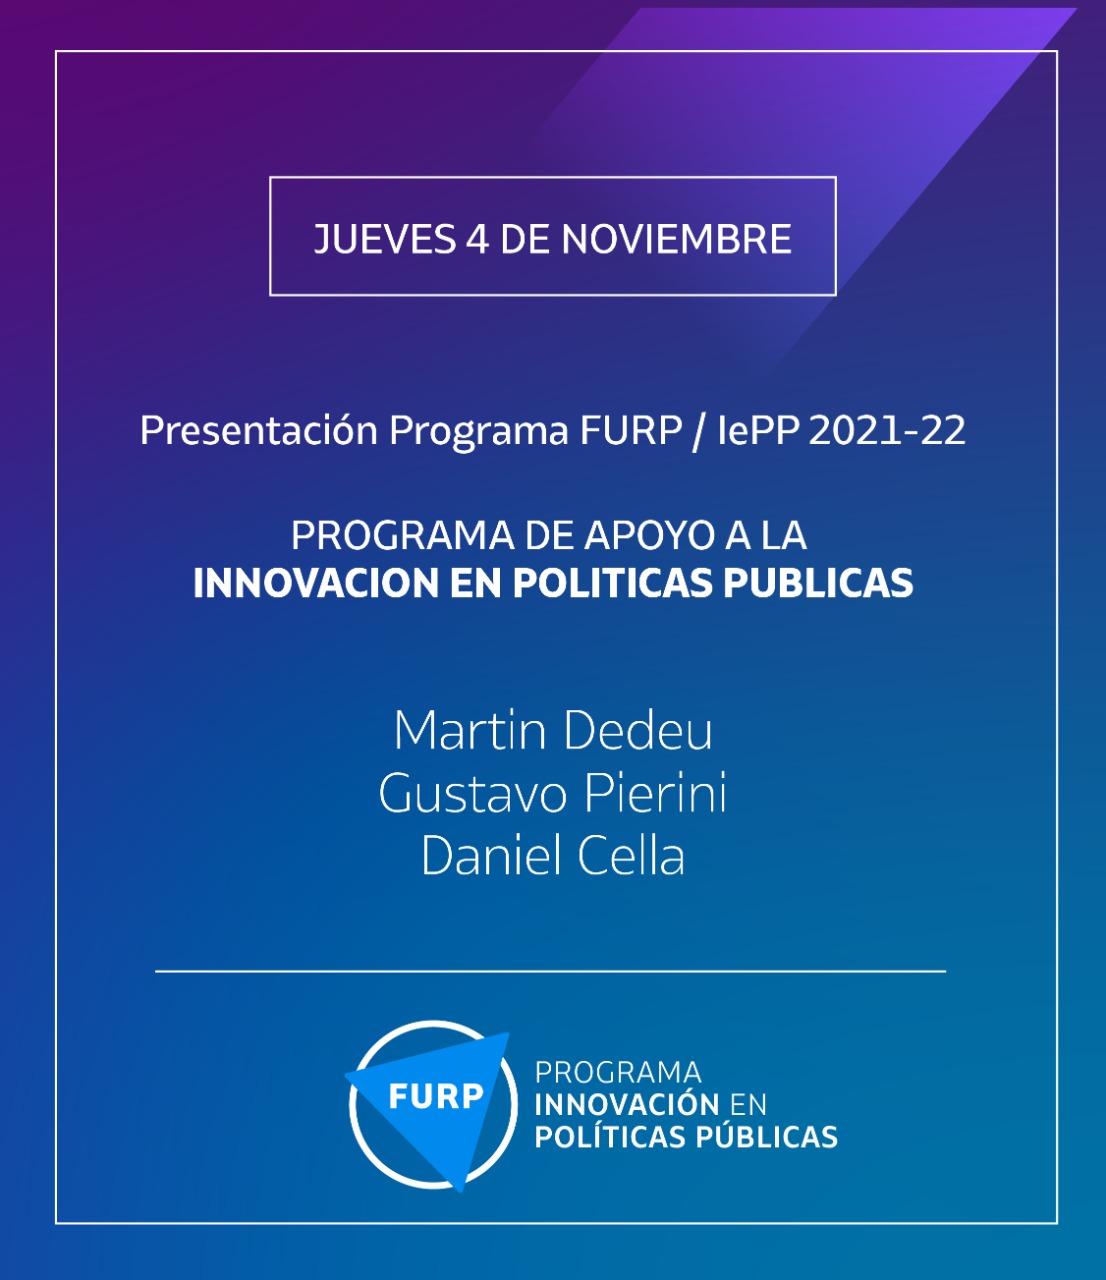 Foto para: Programa de Innovación en Políticas Públicas - Programa IePP 2021-22